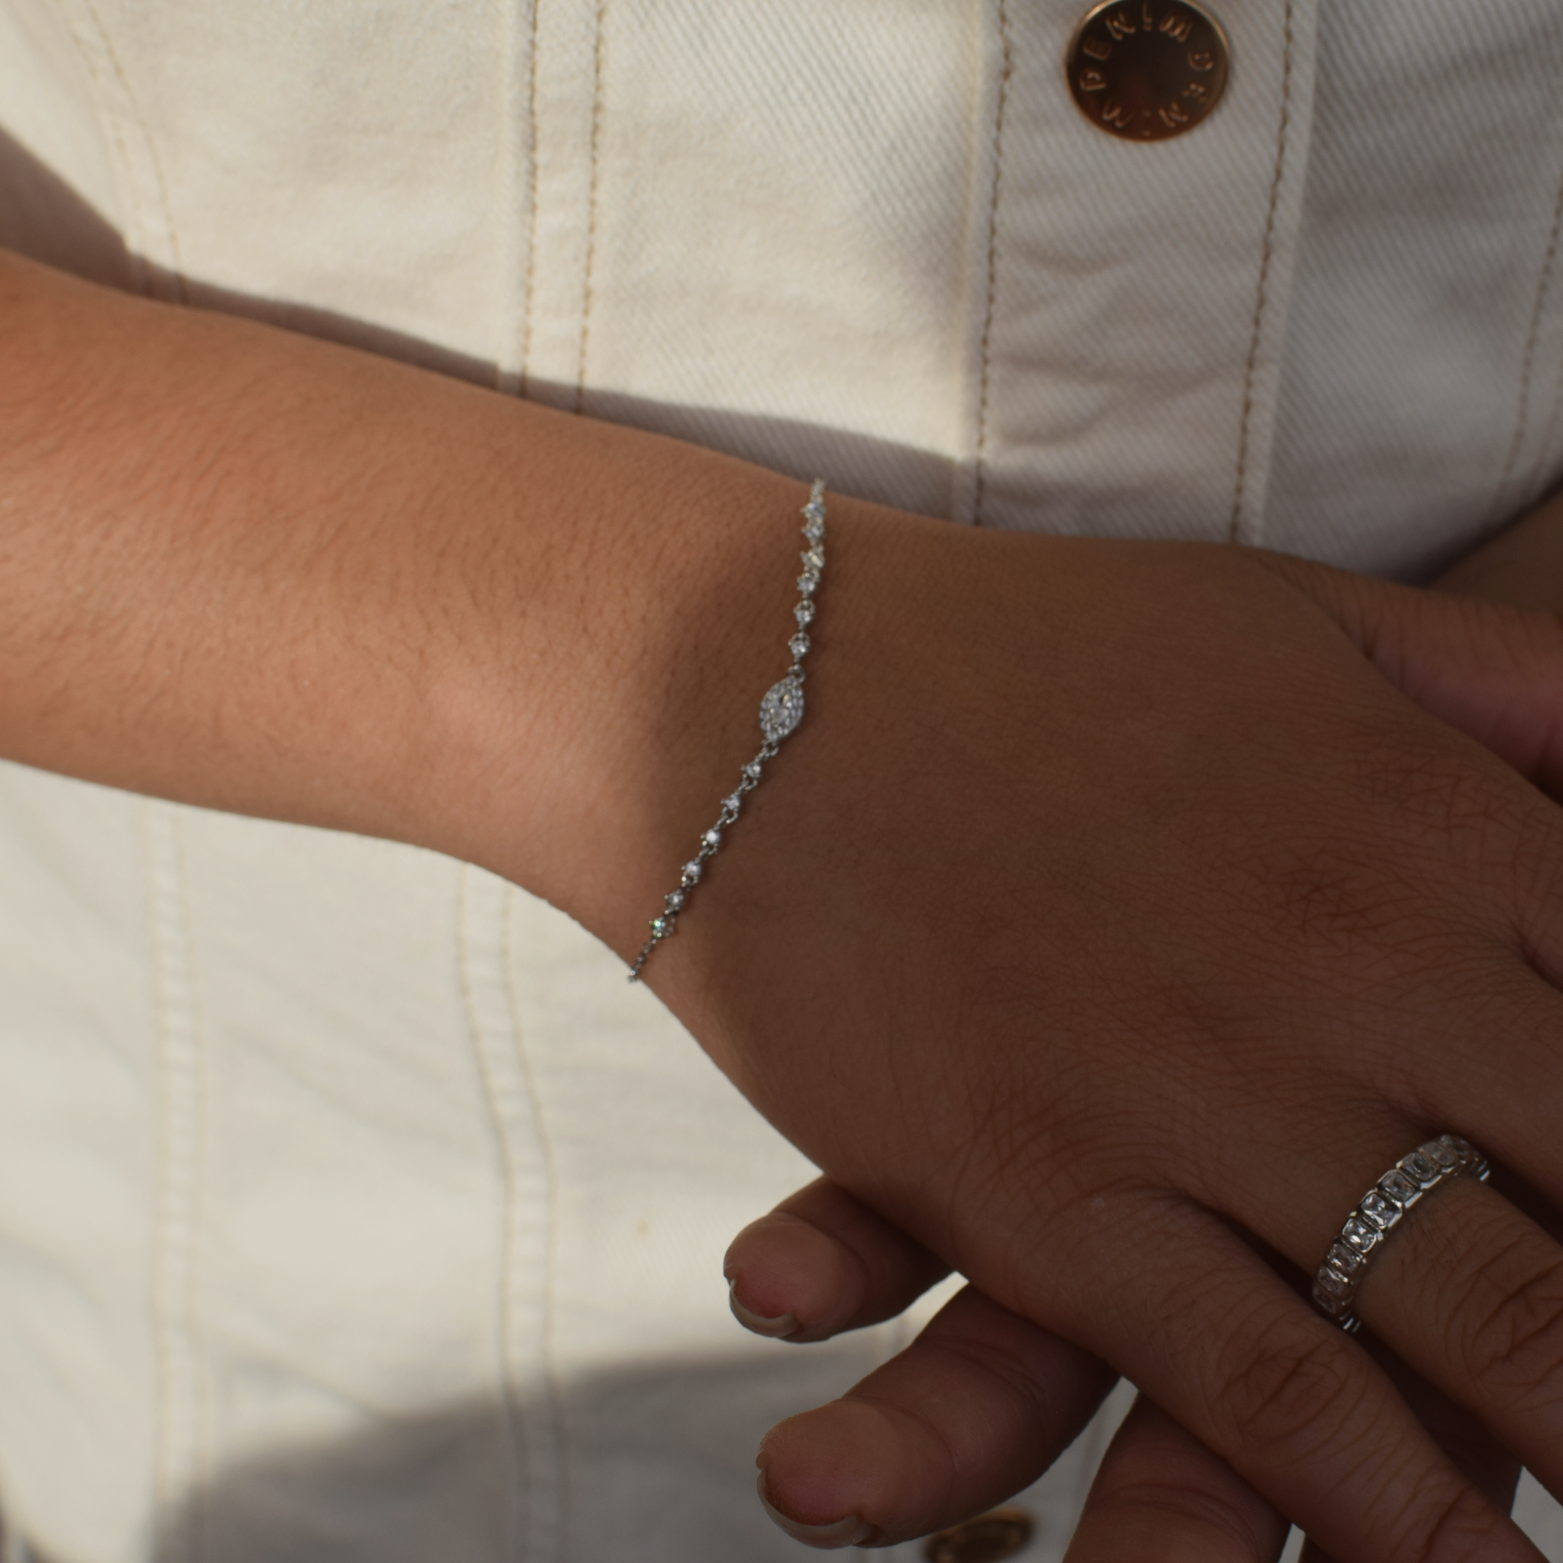 Elegant Ashley bracelet in sterling silver adorned on a female's wrist alongside a matching ring